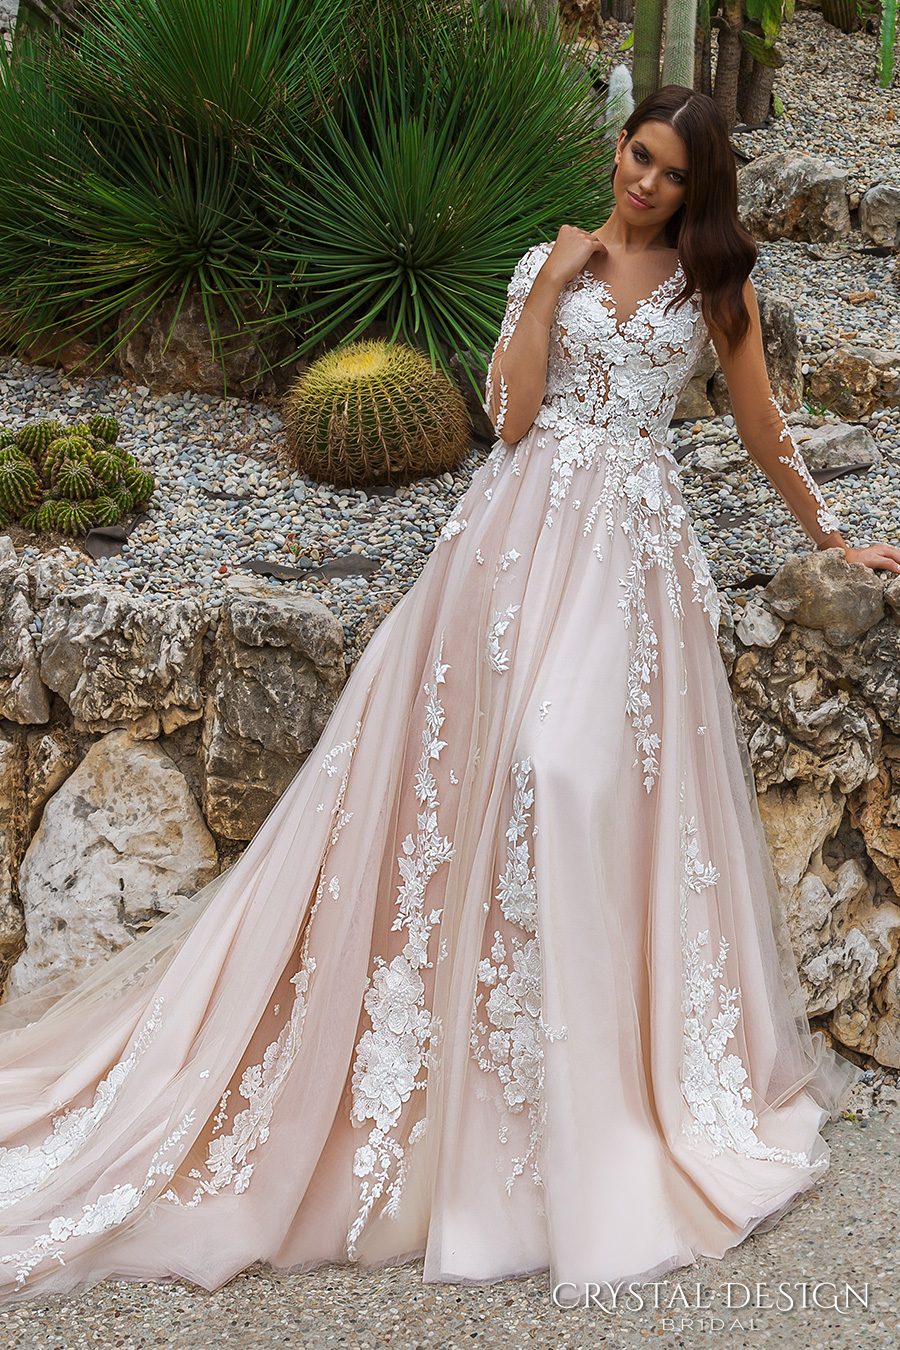 Crystal Design 2017 Wedding Dresses — Haute Couture Bridal Collection, Wedding Inspirasi